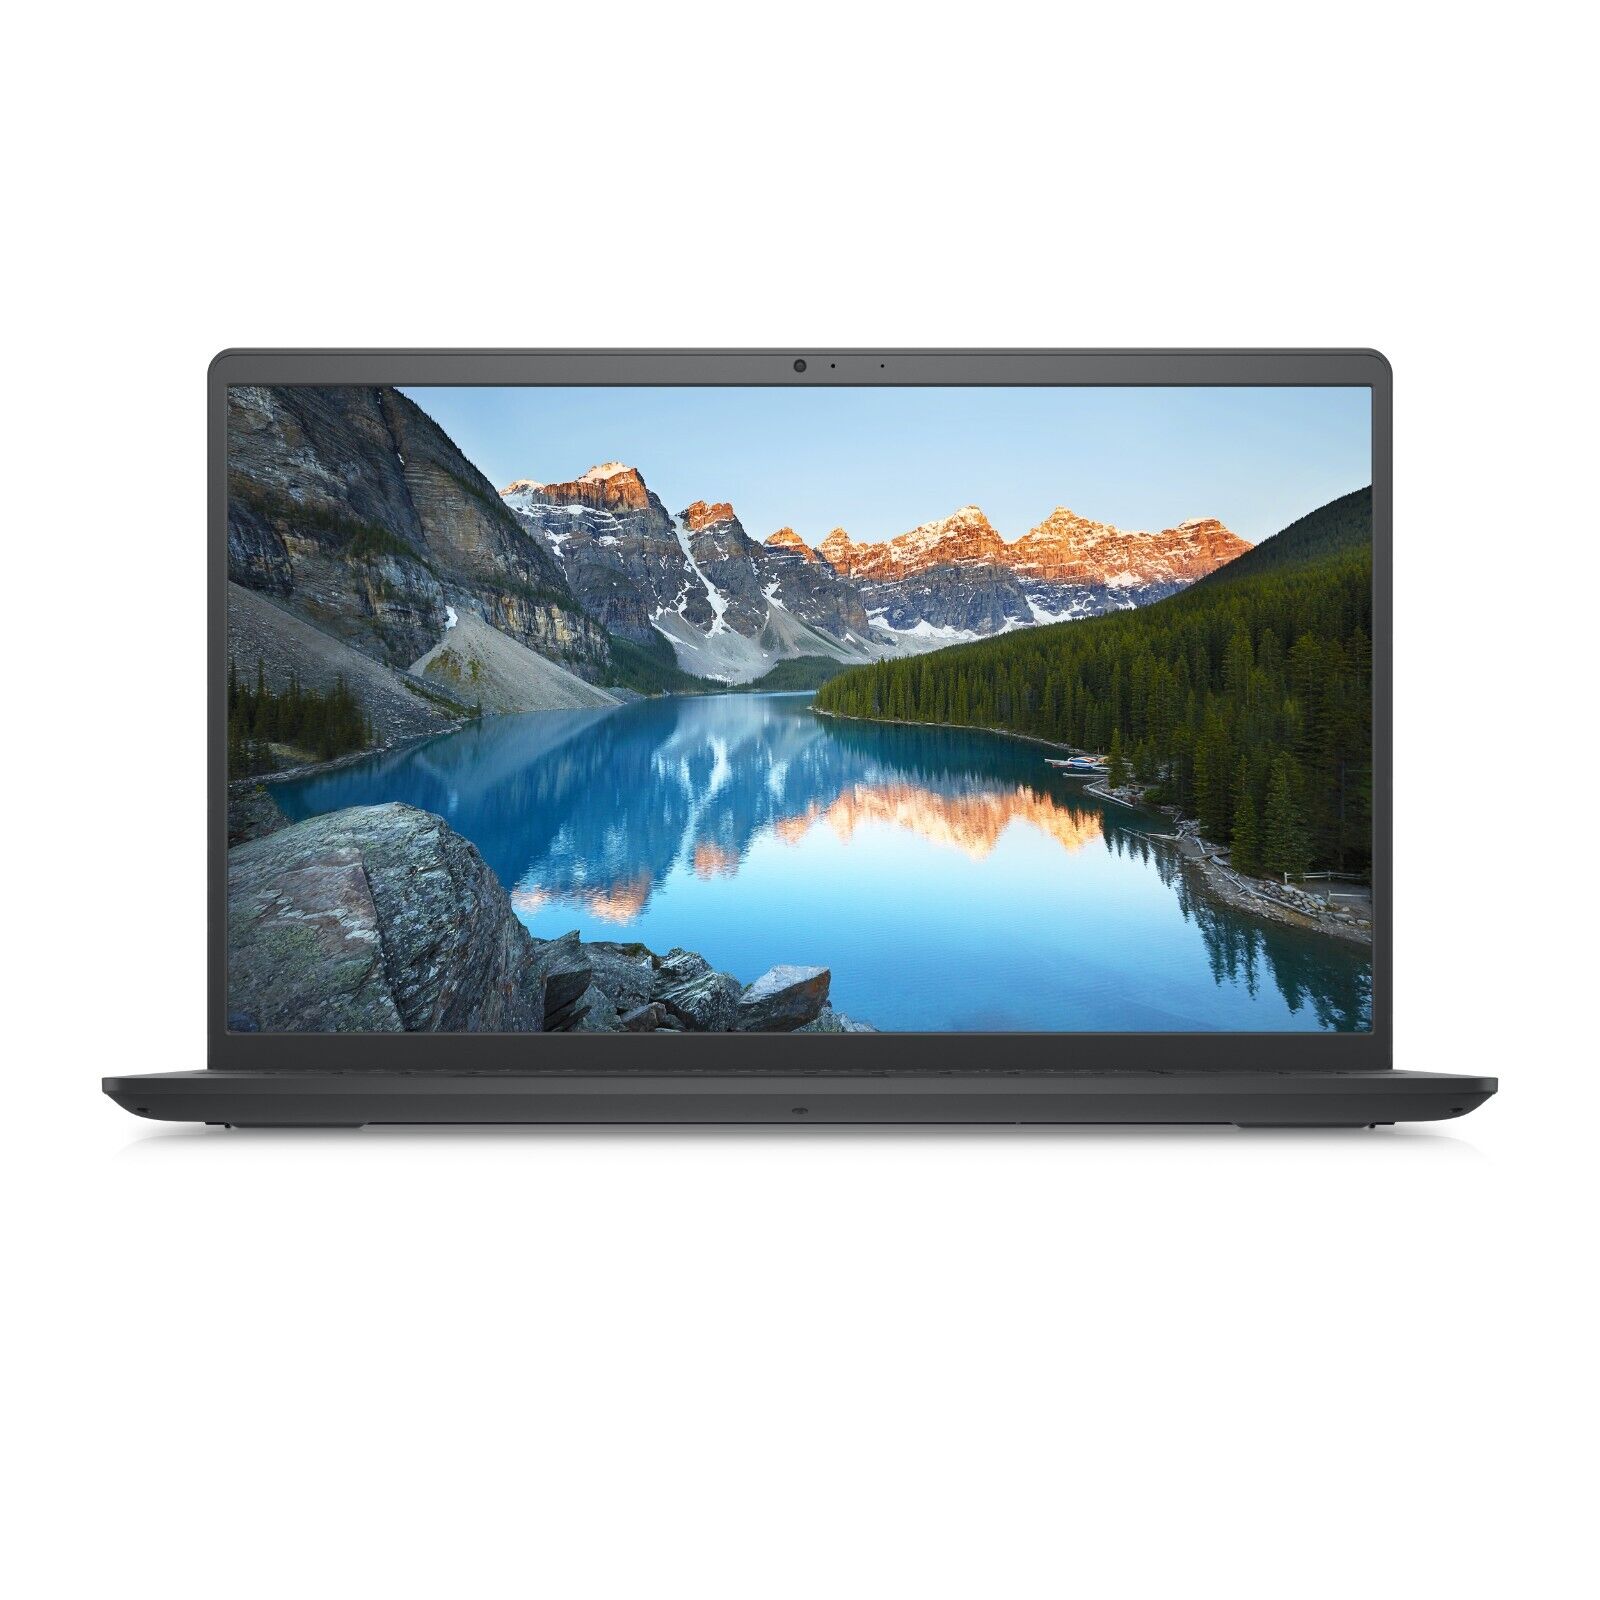 Dell Laptop Inspiron 3515 15.6in Full HD AMD Ryzen 5 8GB Memory 256GB Storage